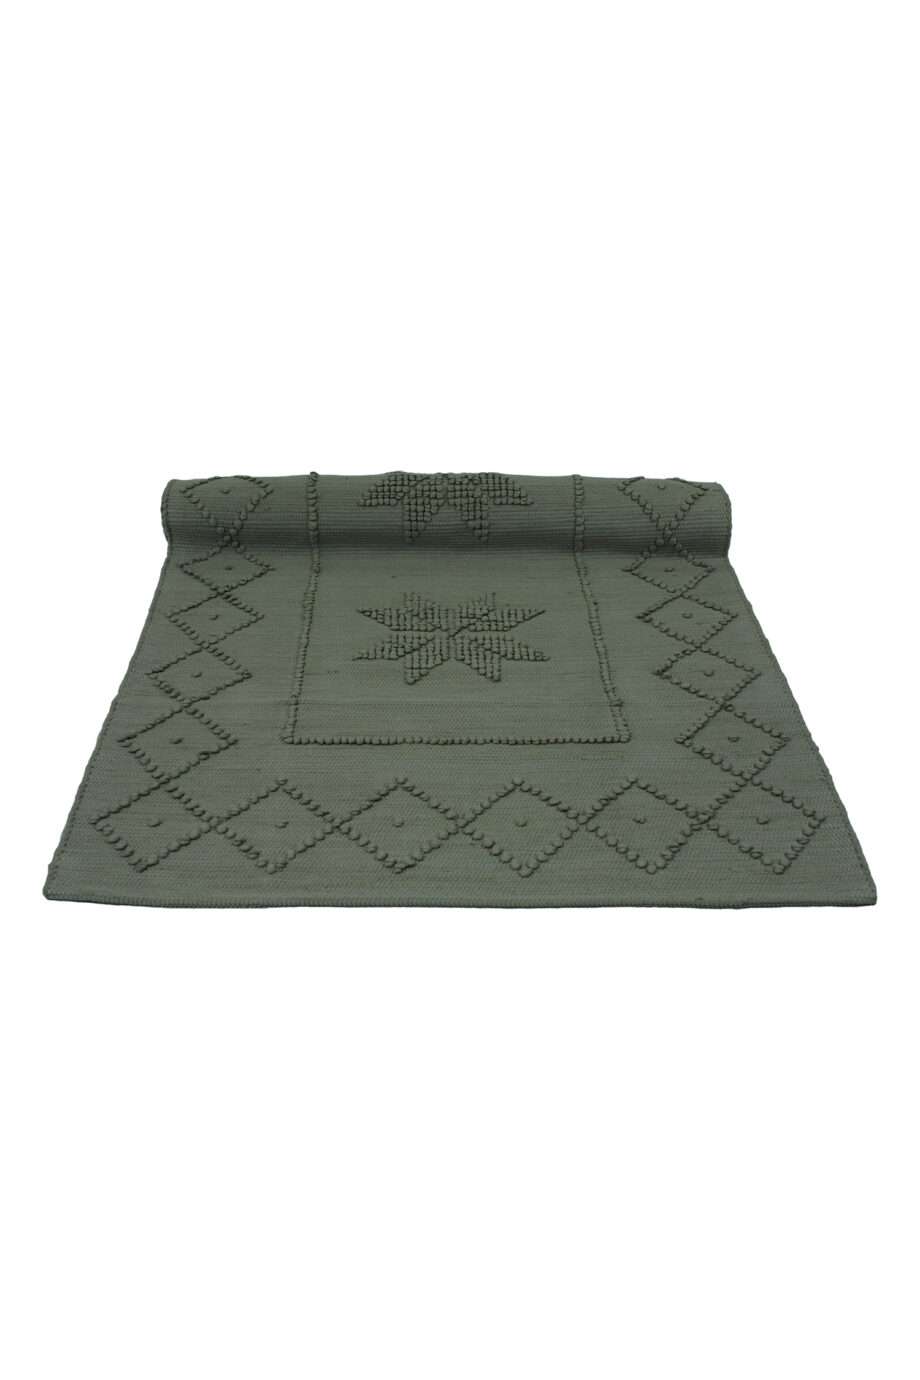 star olive green woven cotton floor mat 50x100cm